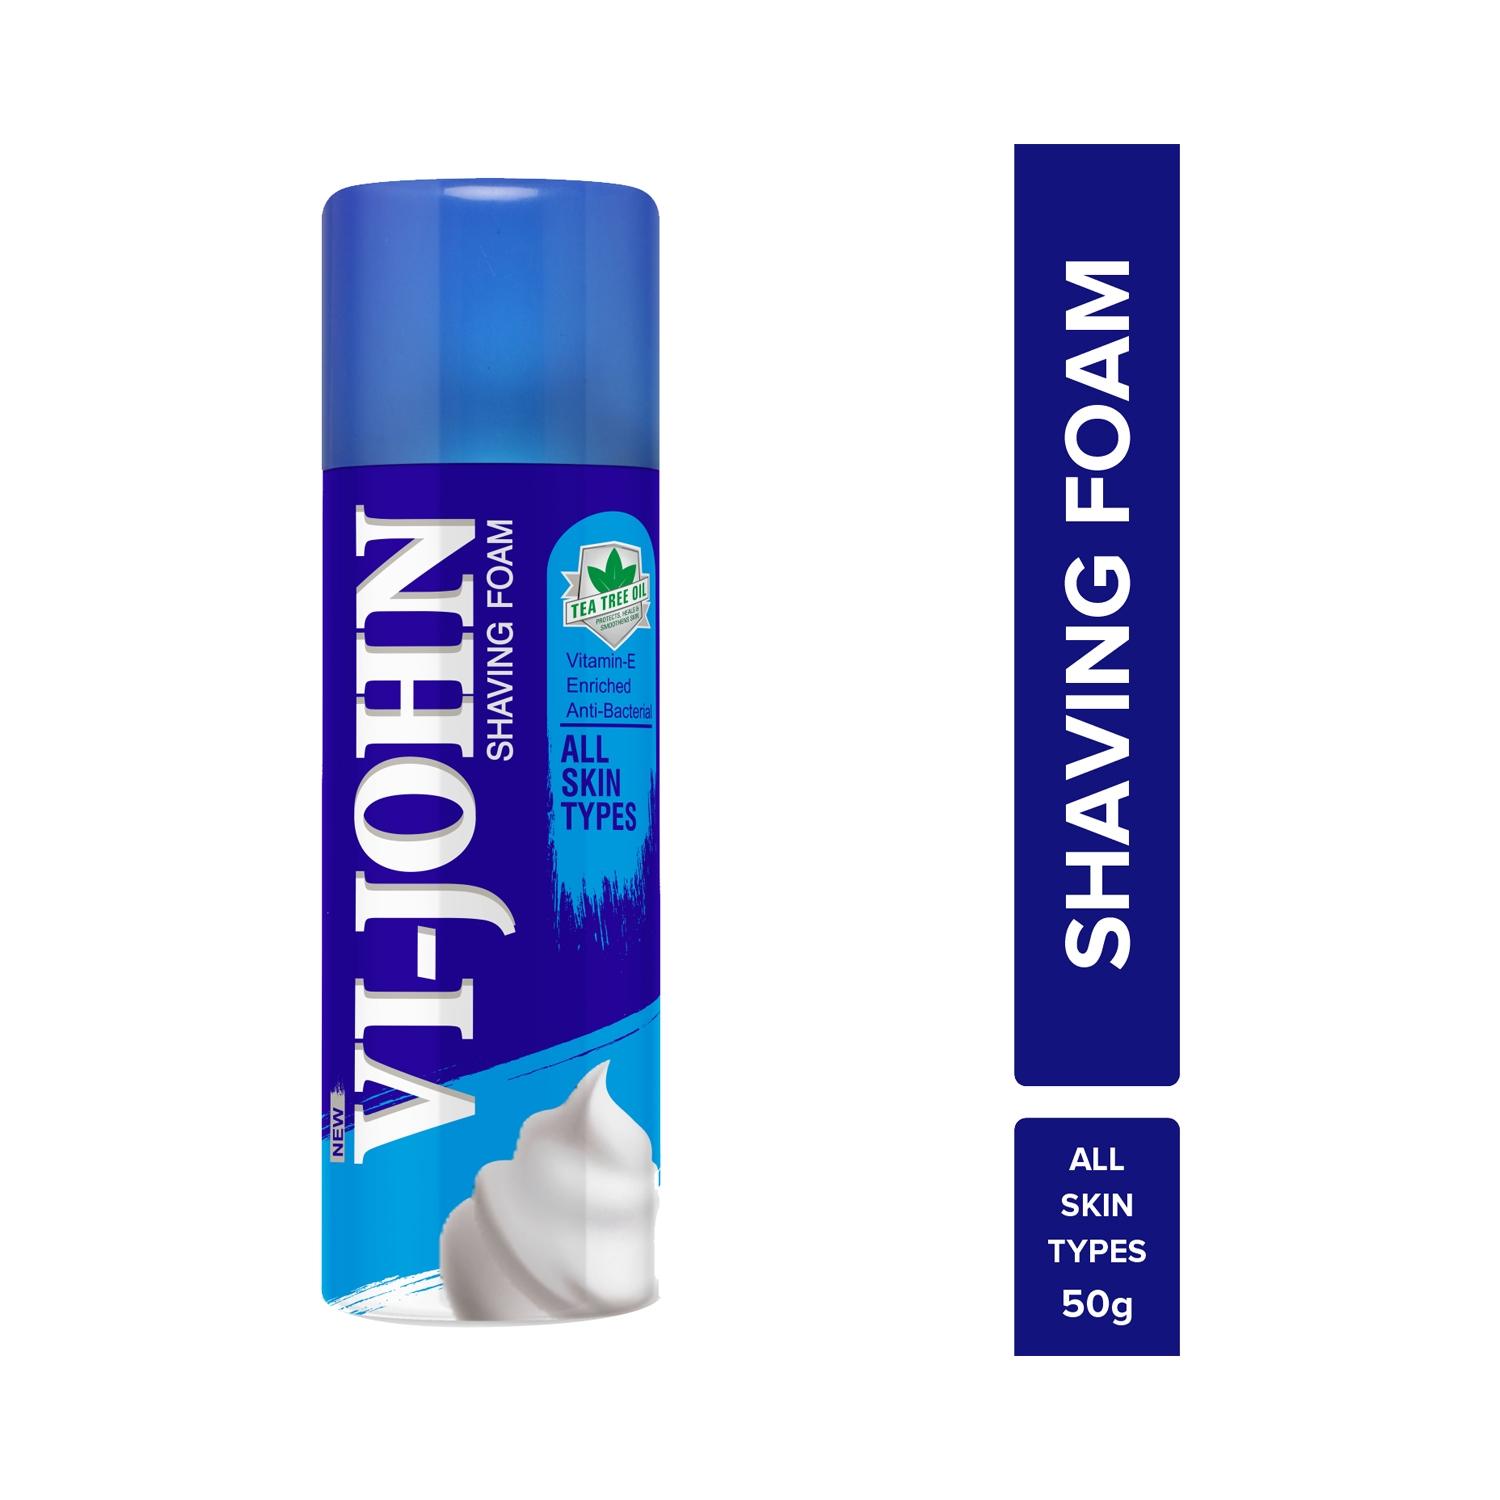 VI-JOHN | VI-JOHN Shaving Foam With Vitamin E Enriched & Antibacterial Properties (50g)